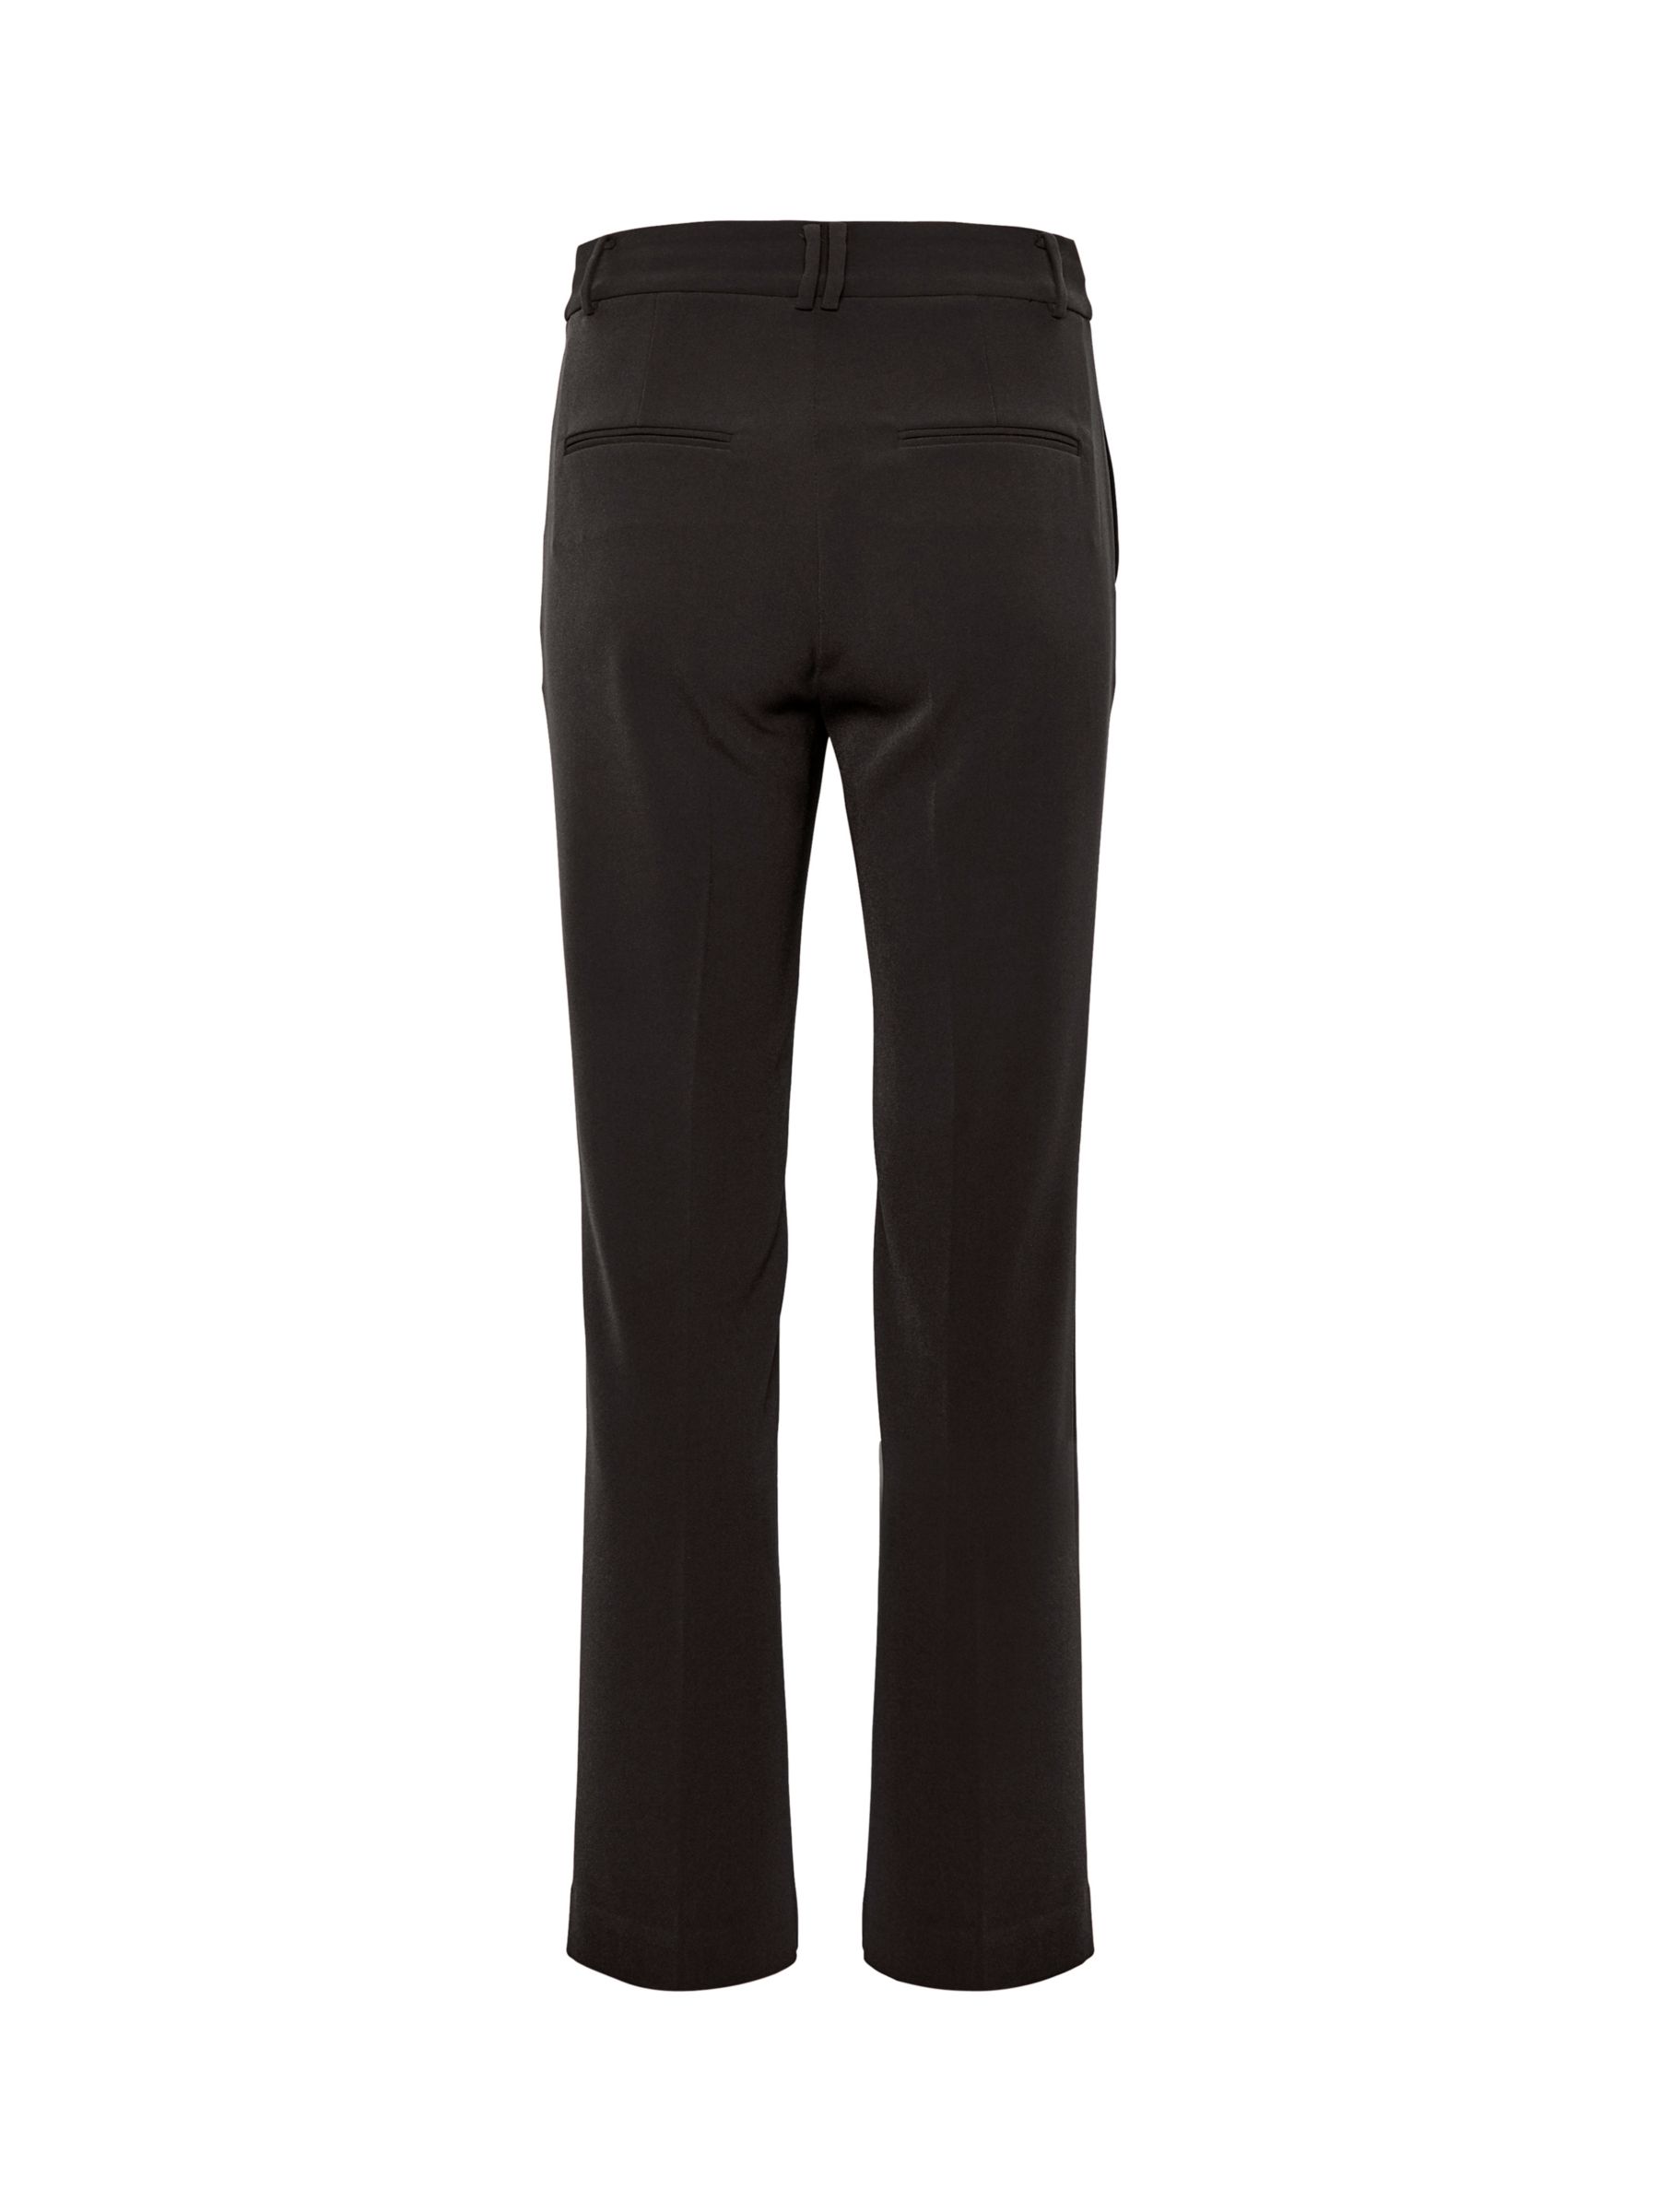 InWear Veta Bootcut Trousers, Black at John Lewis & Partners